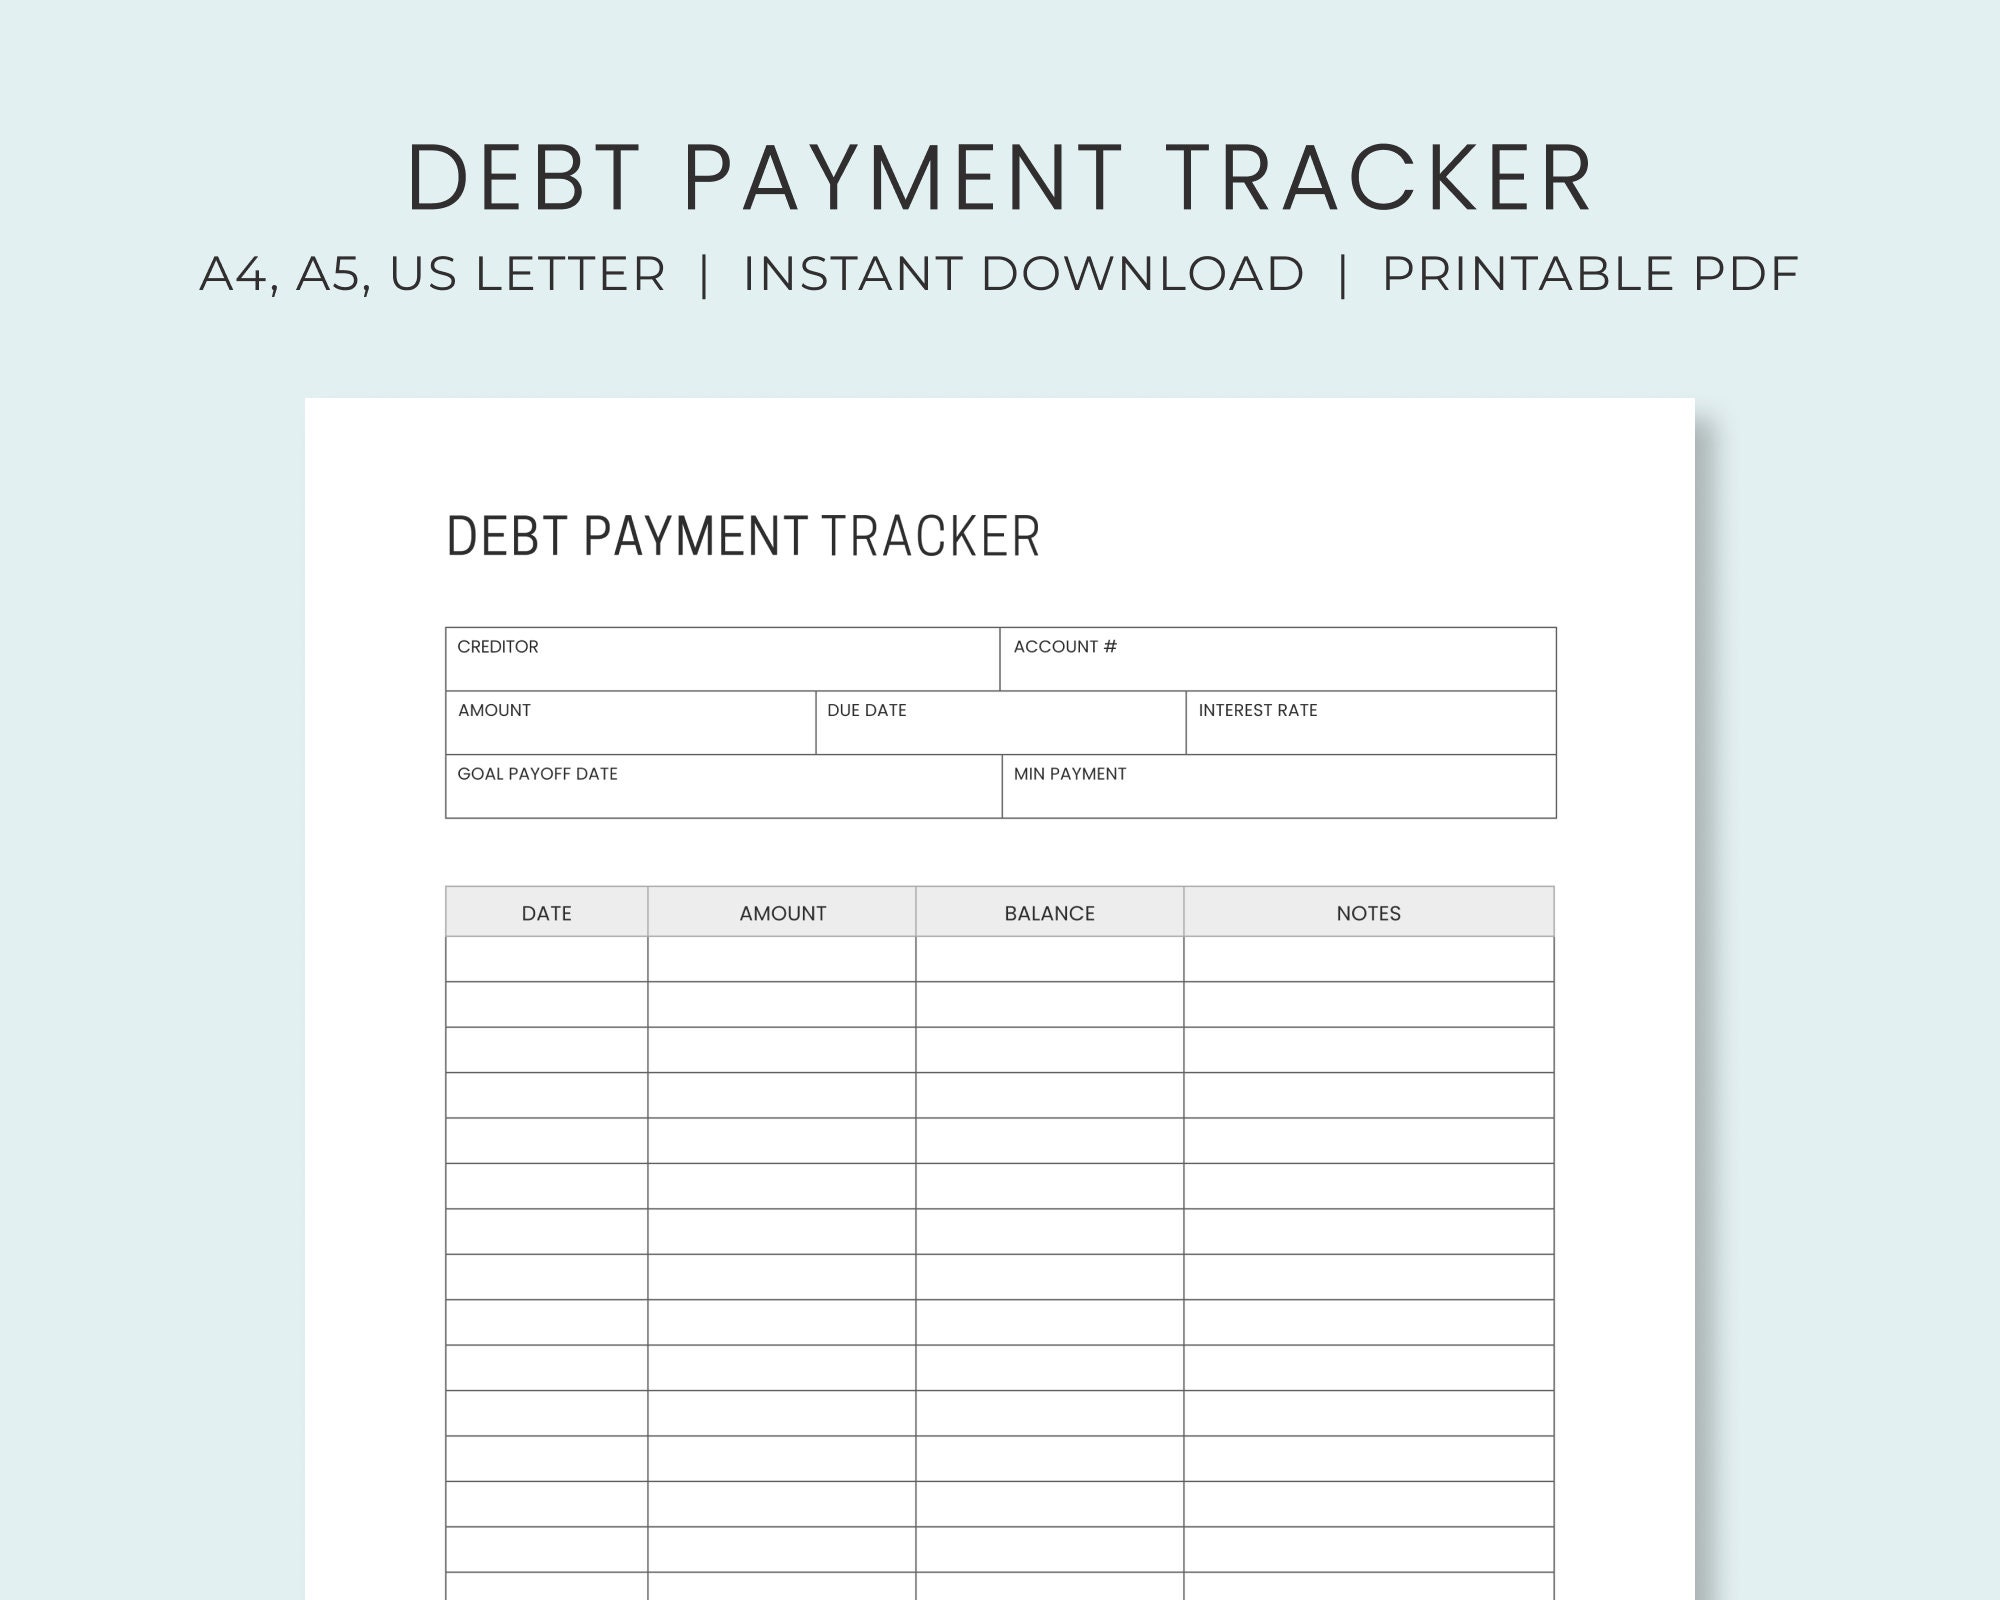 free-debt-tracker-printable